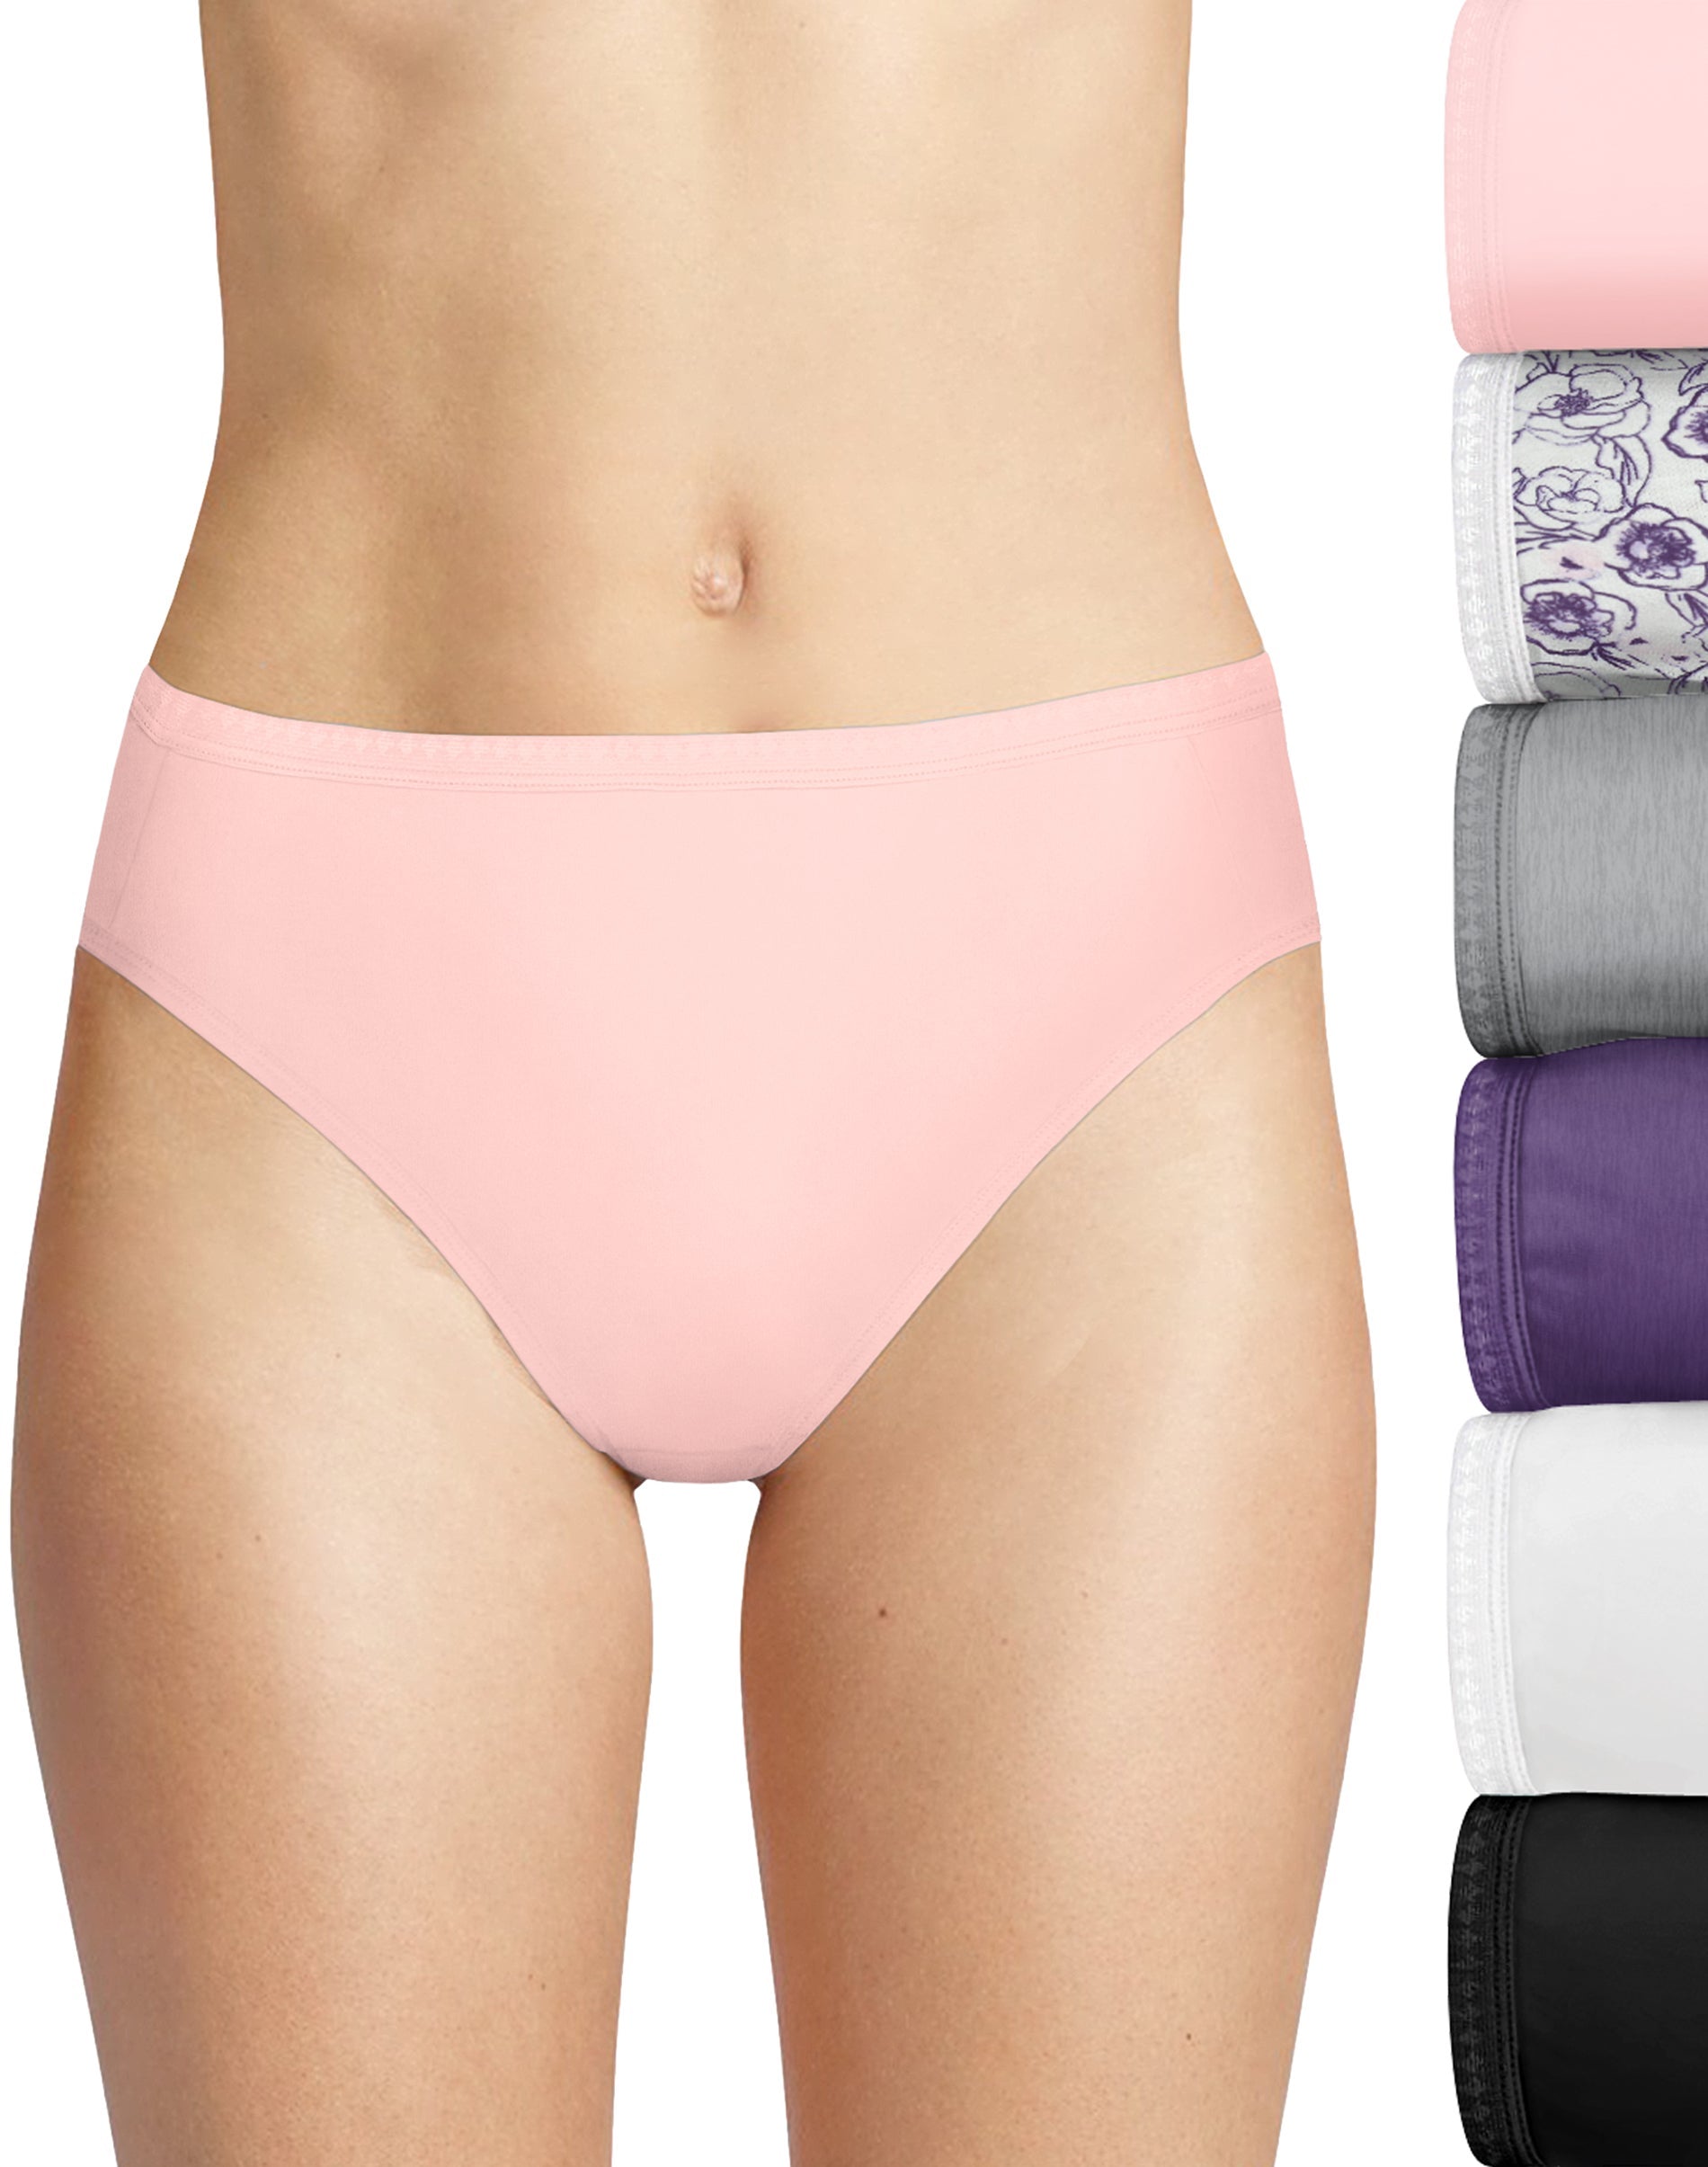 Hanes Classics Women's Panties 4-Pack No Ride Up High Cut Cotton Underwear  Sz. 6 